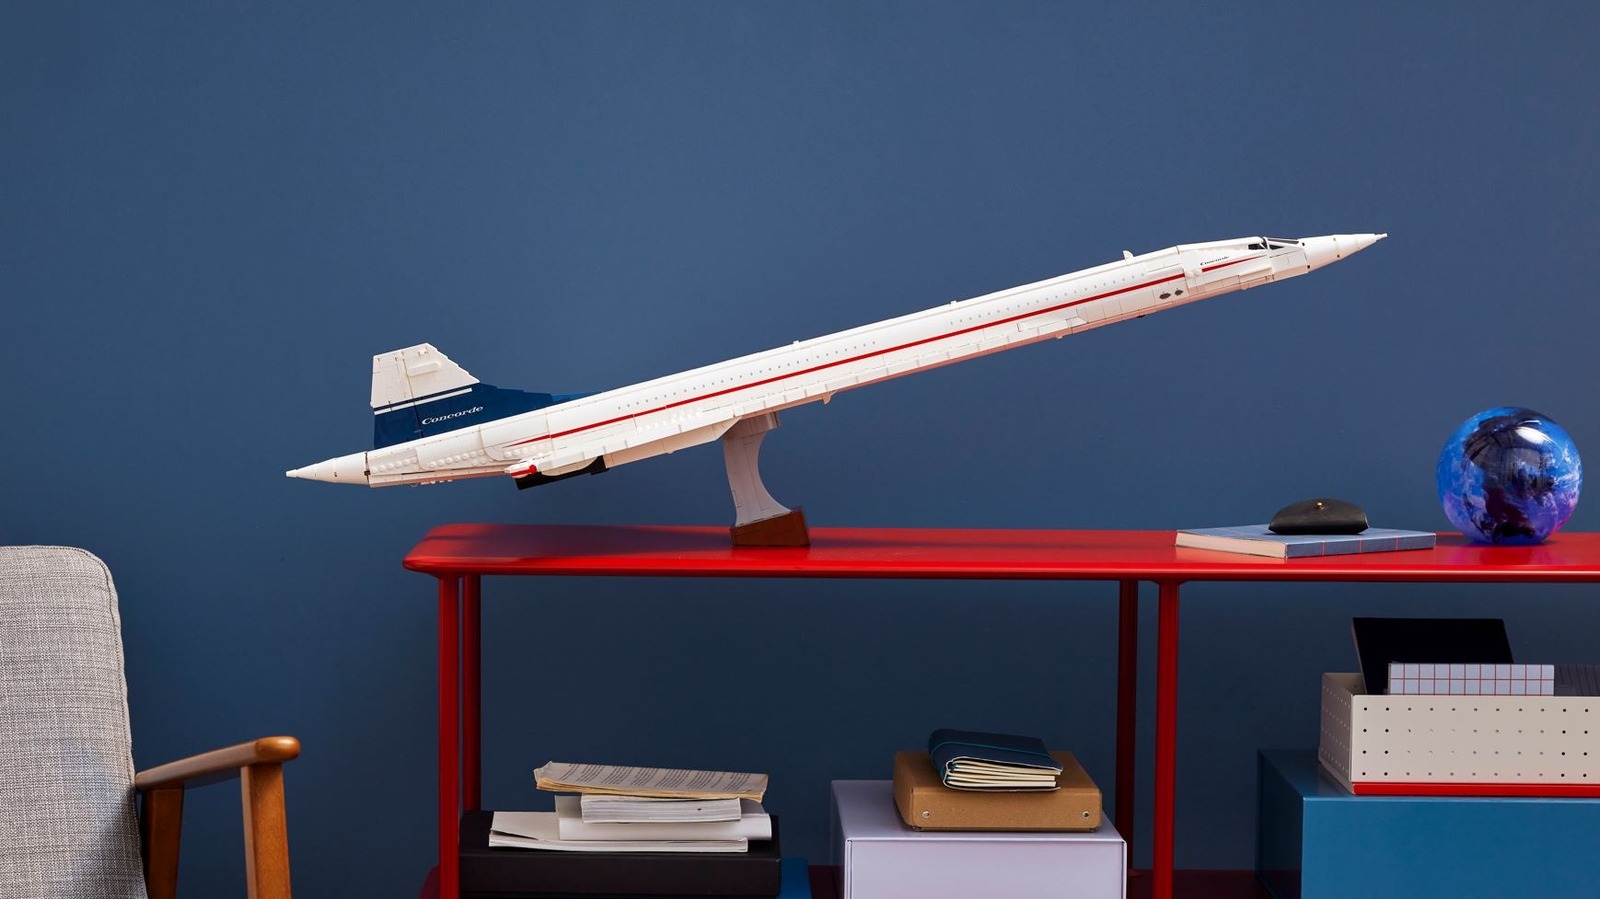 LEGO's New Concorde Set Has Some Surprises For Aviation Fans